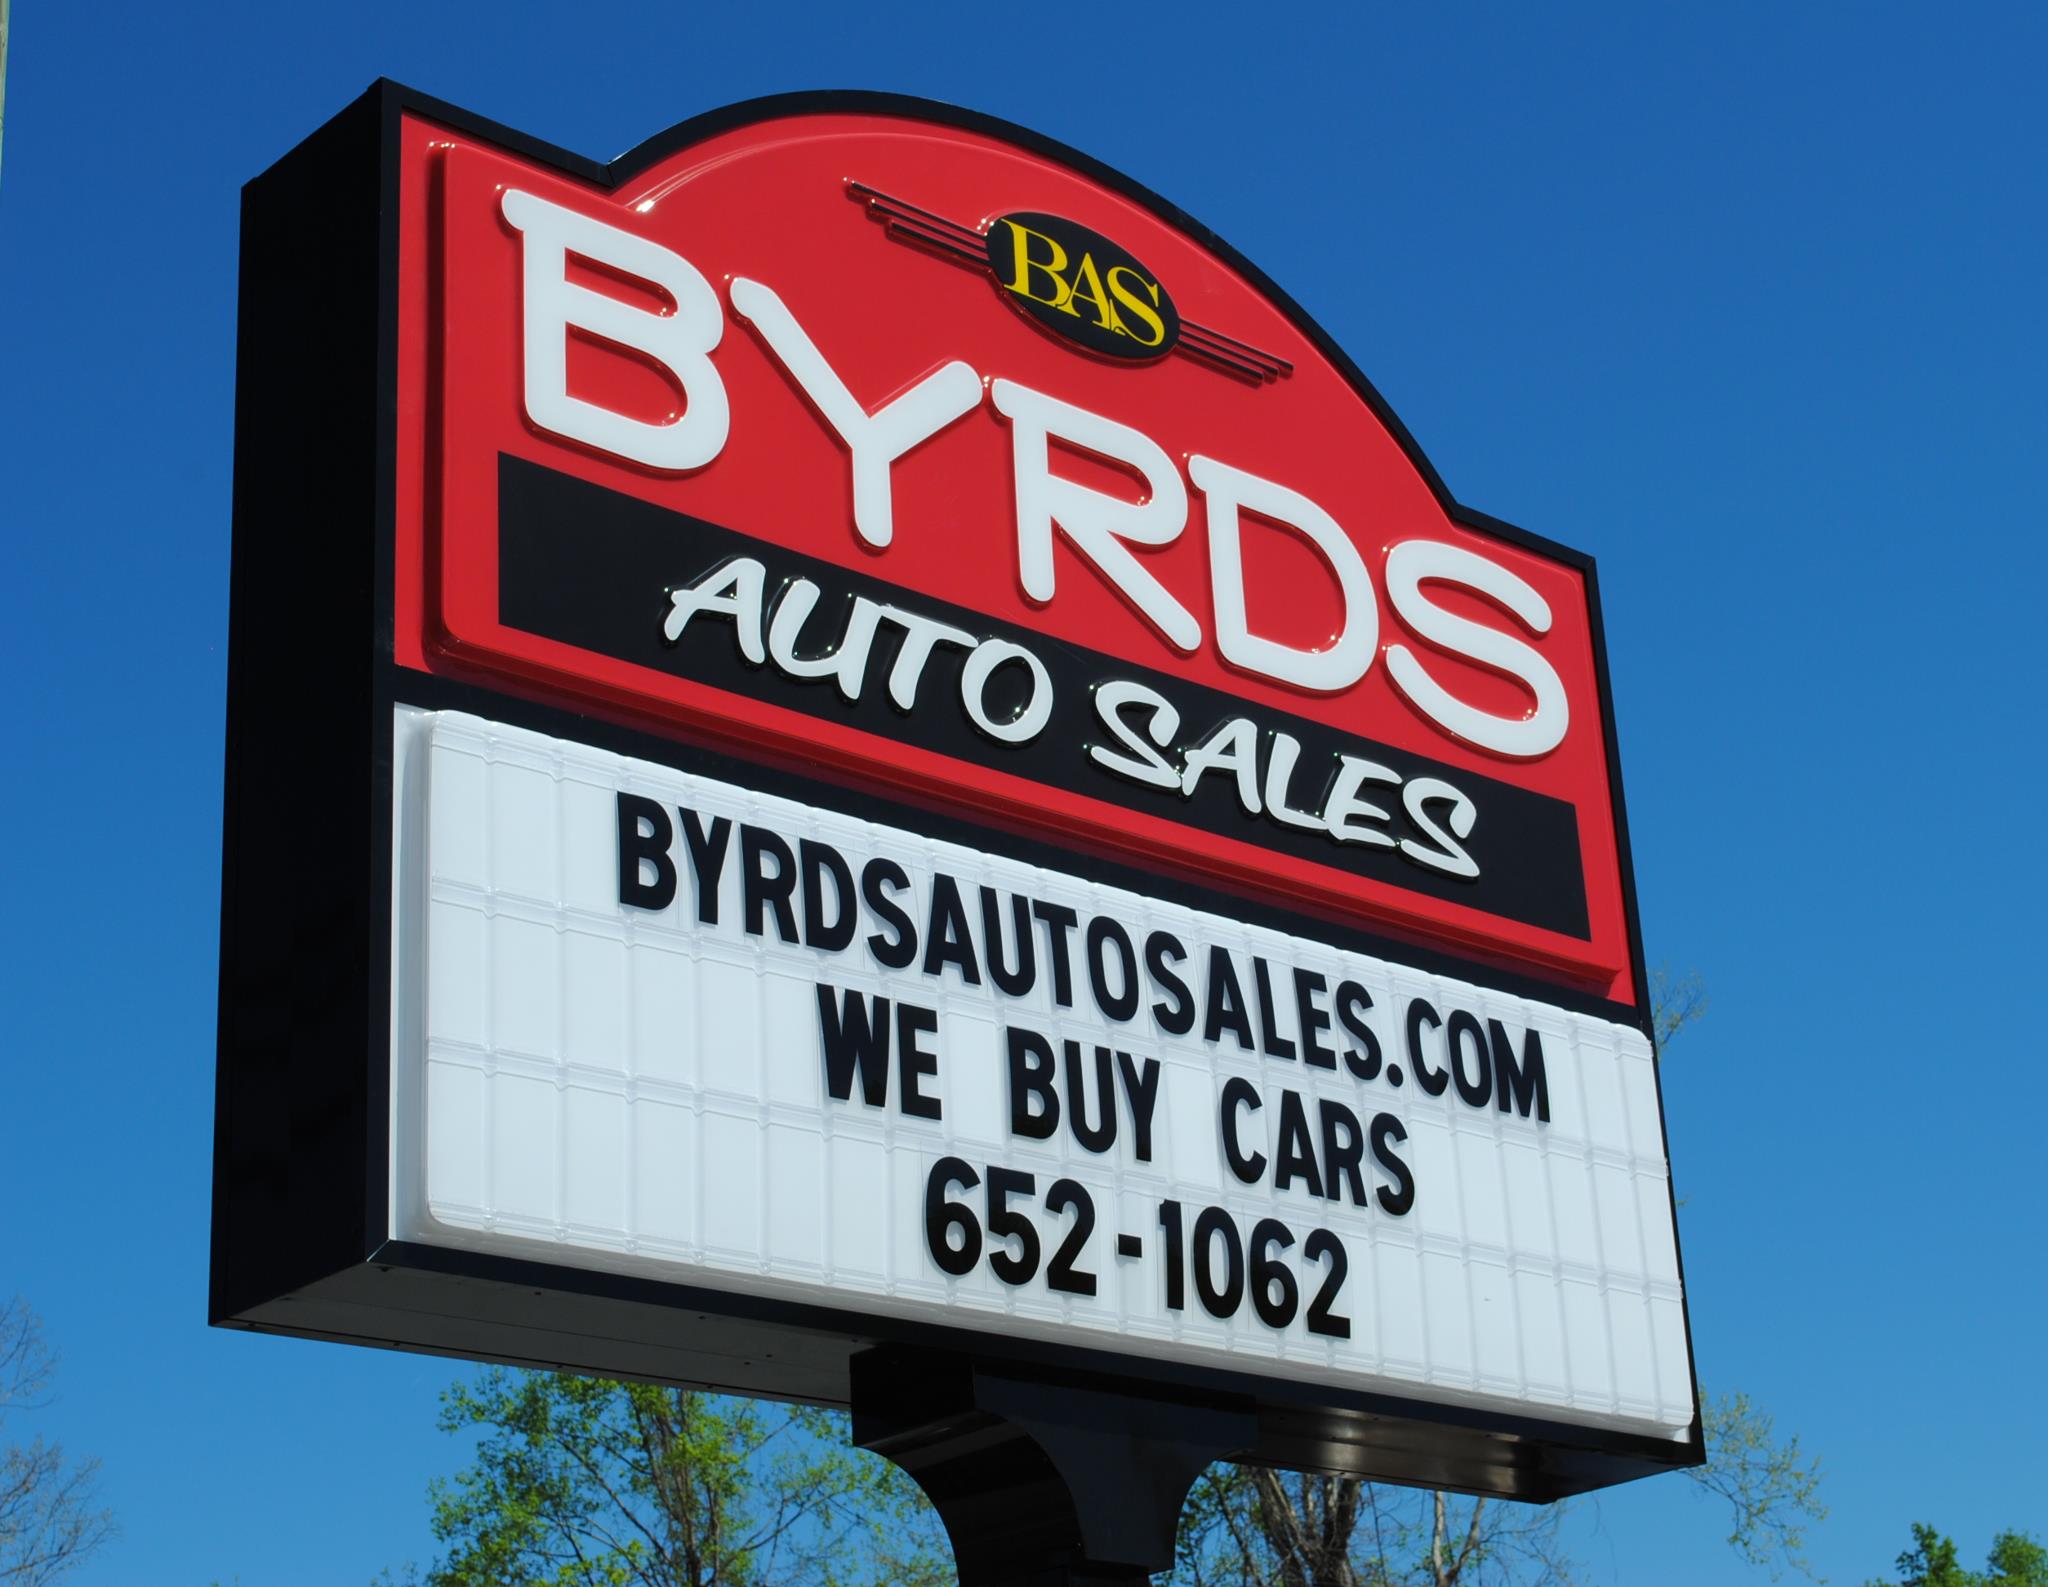 Byrd's Auto Sales